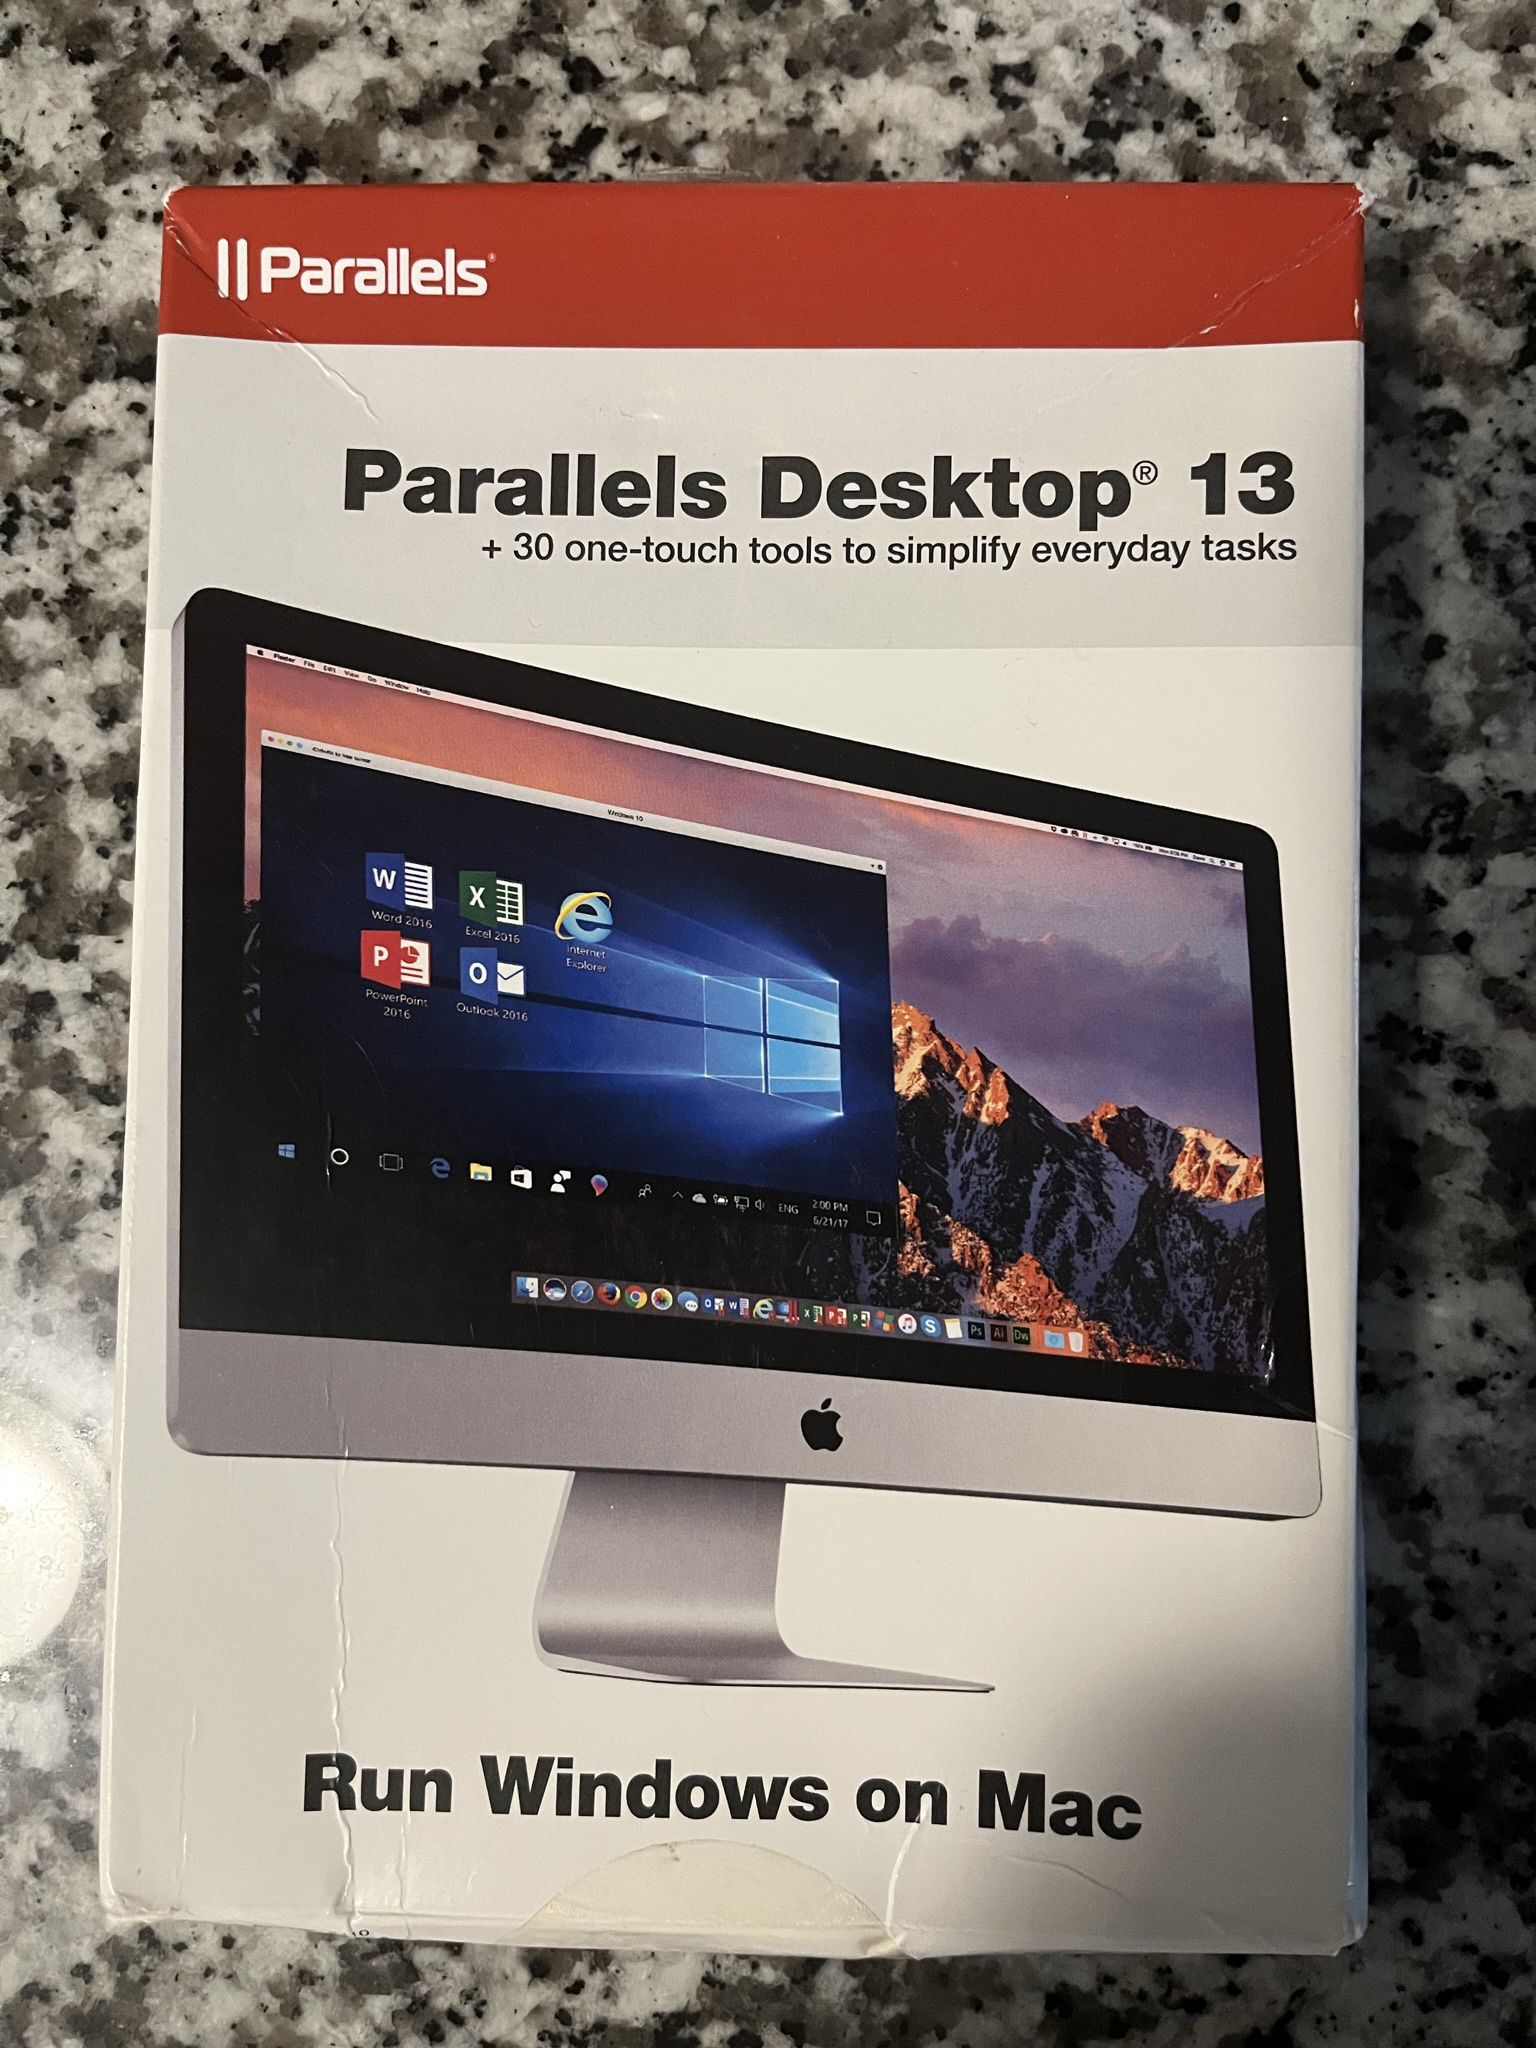 Parallels Desktop 13 for Mac - Instant Download